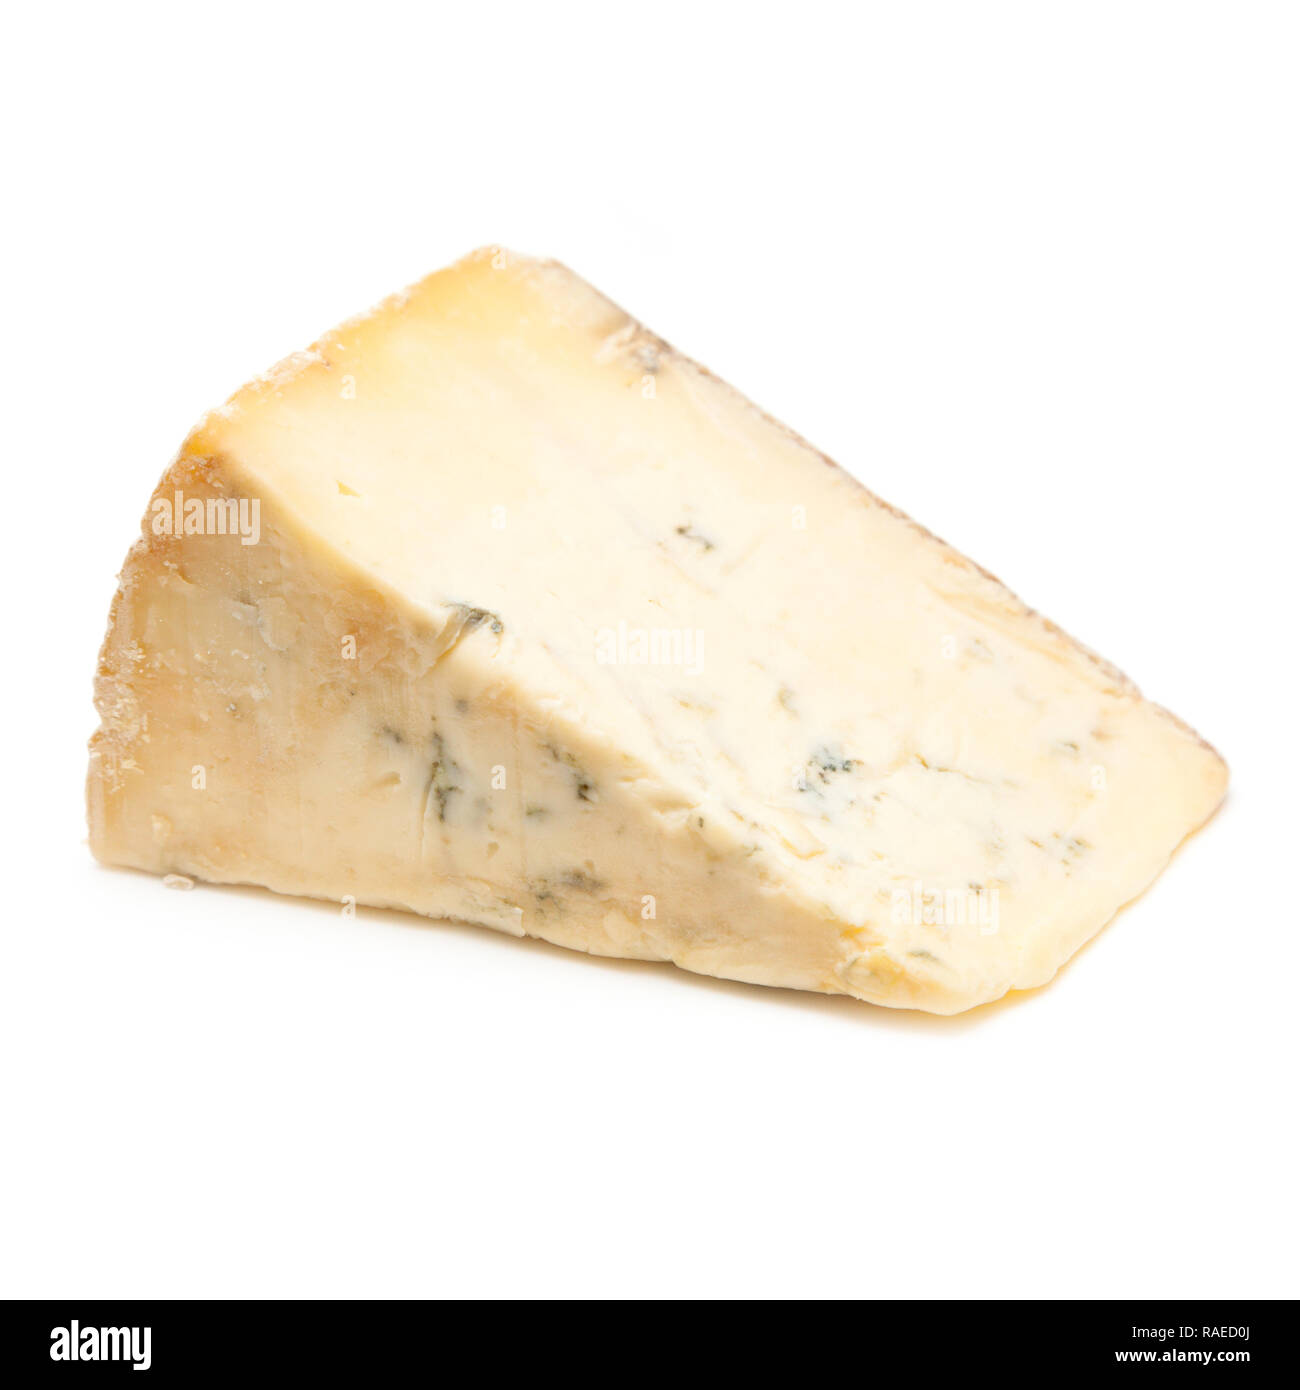 Mature blue Stilton cheese isolated on a white studio background. Stock Photo